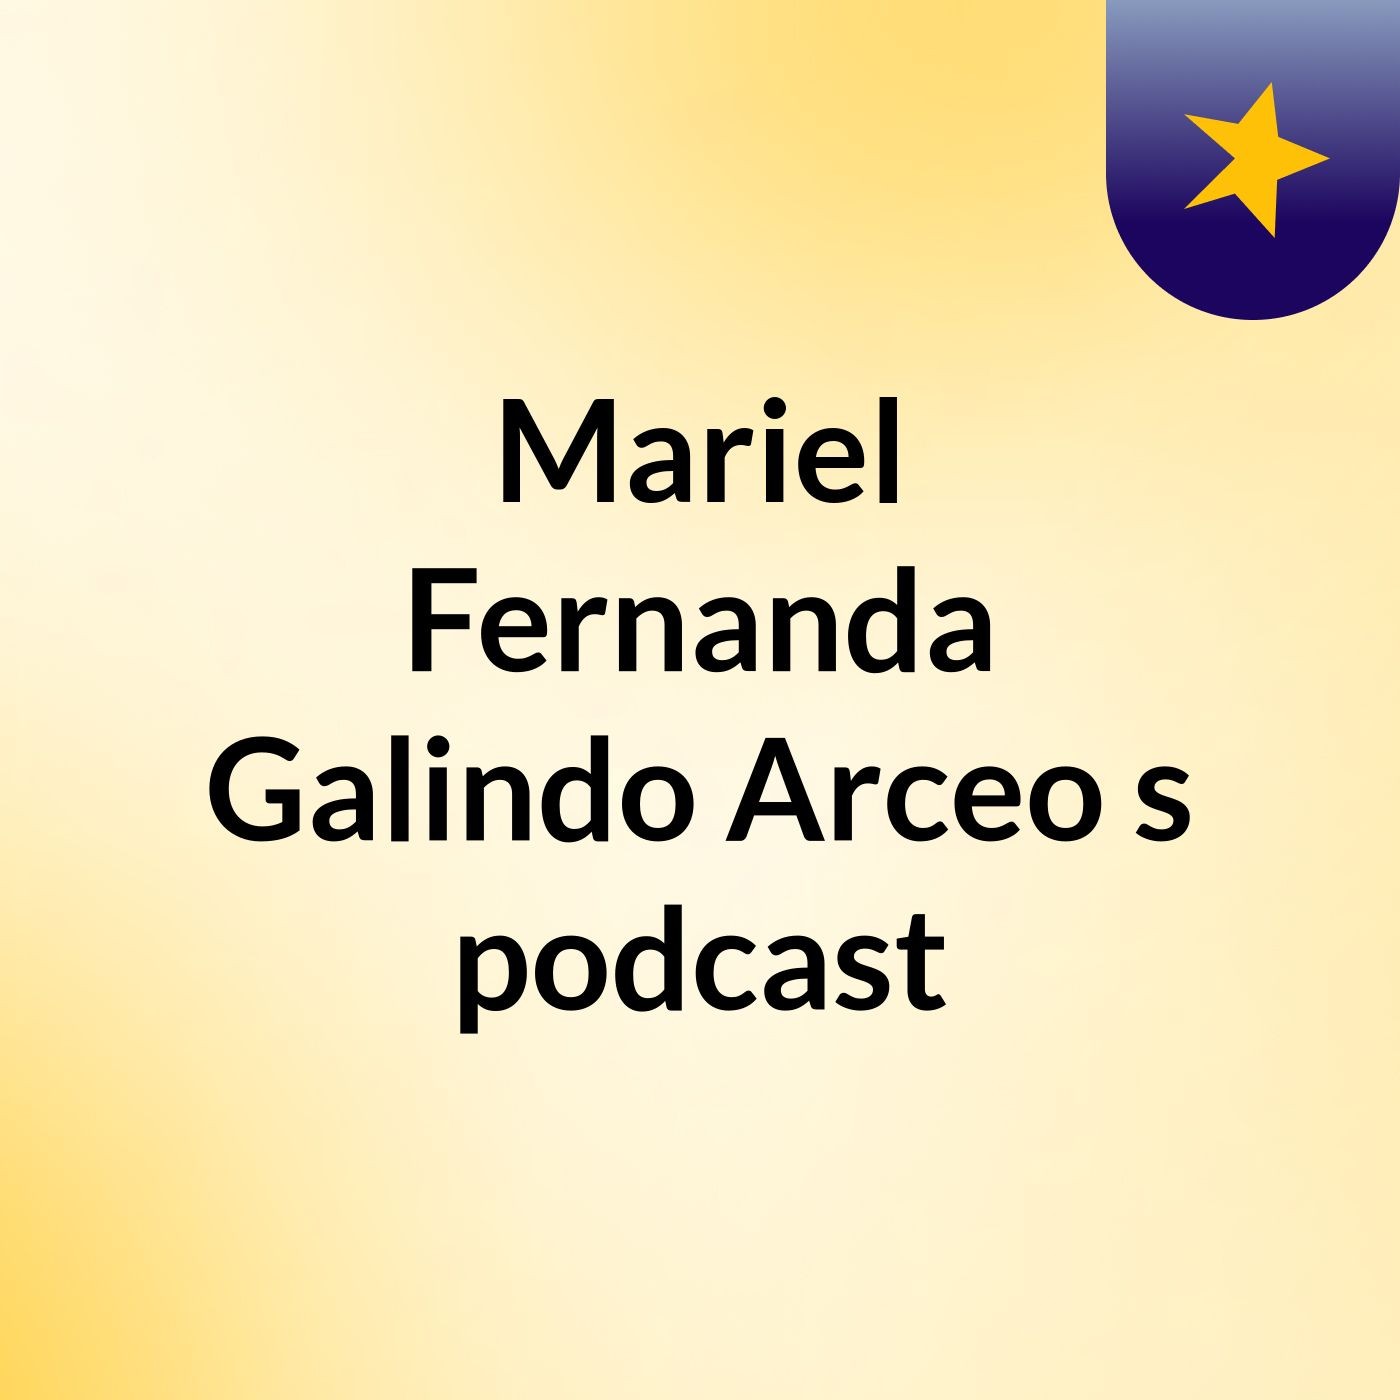 Mariel Fernanda Galindo Arceo's podcast